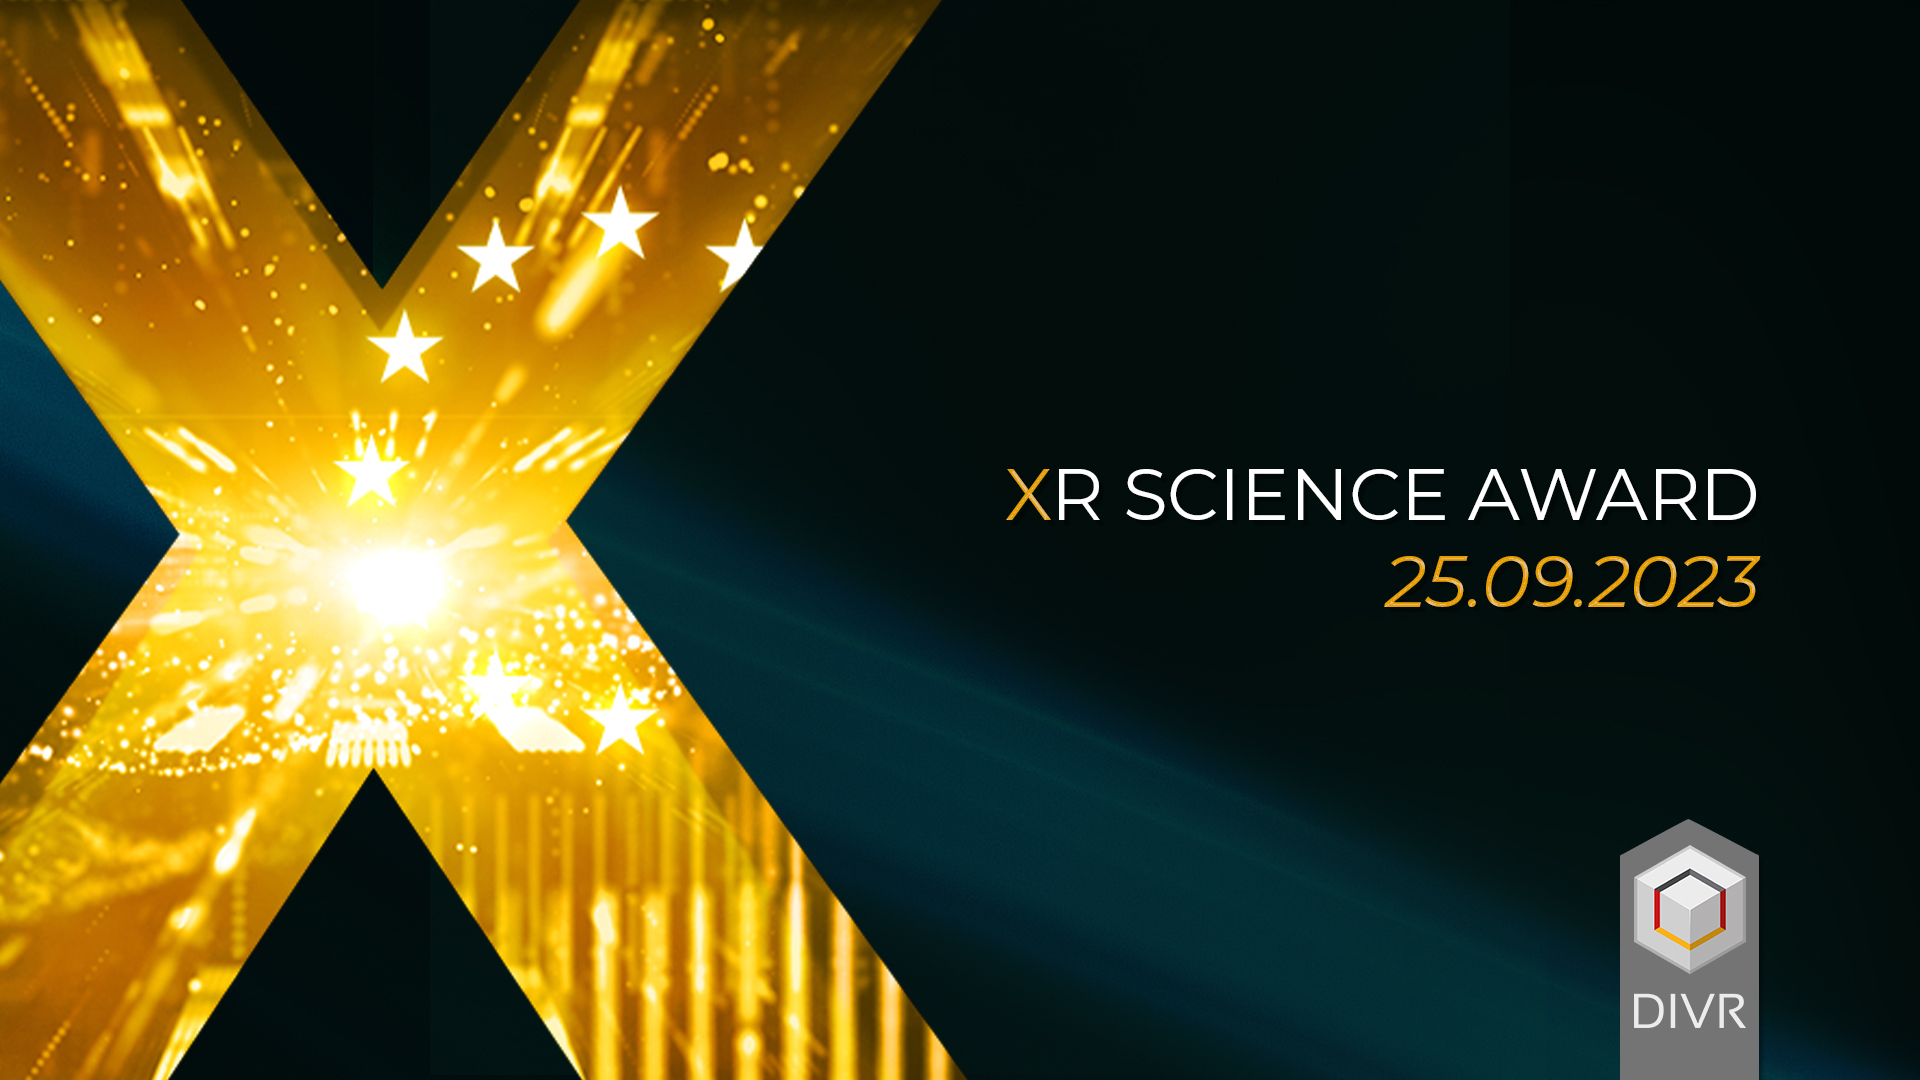 XR Science Award 2023